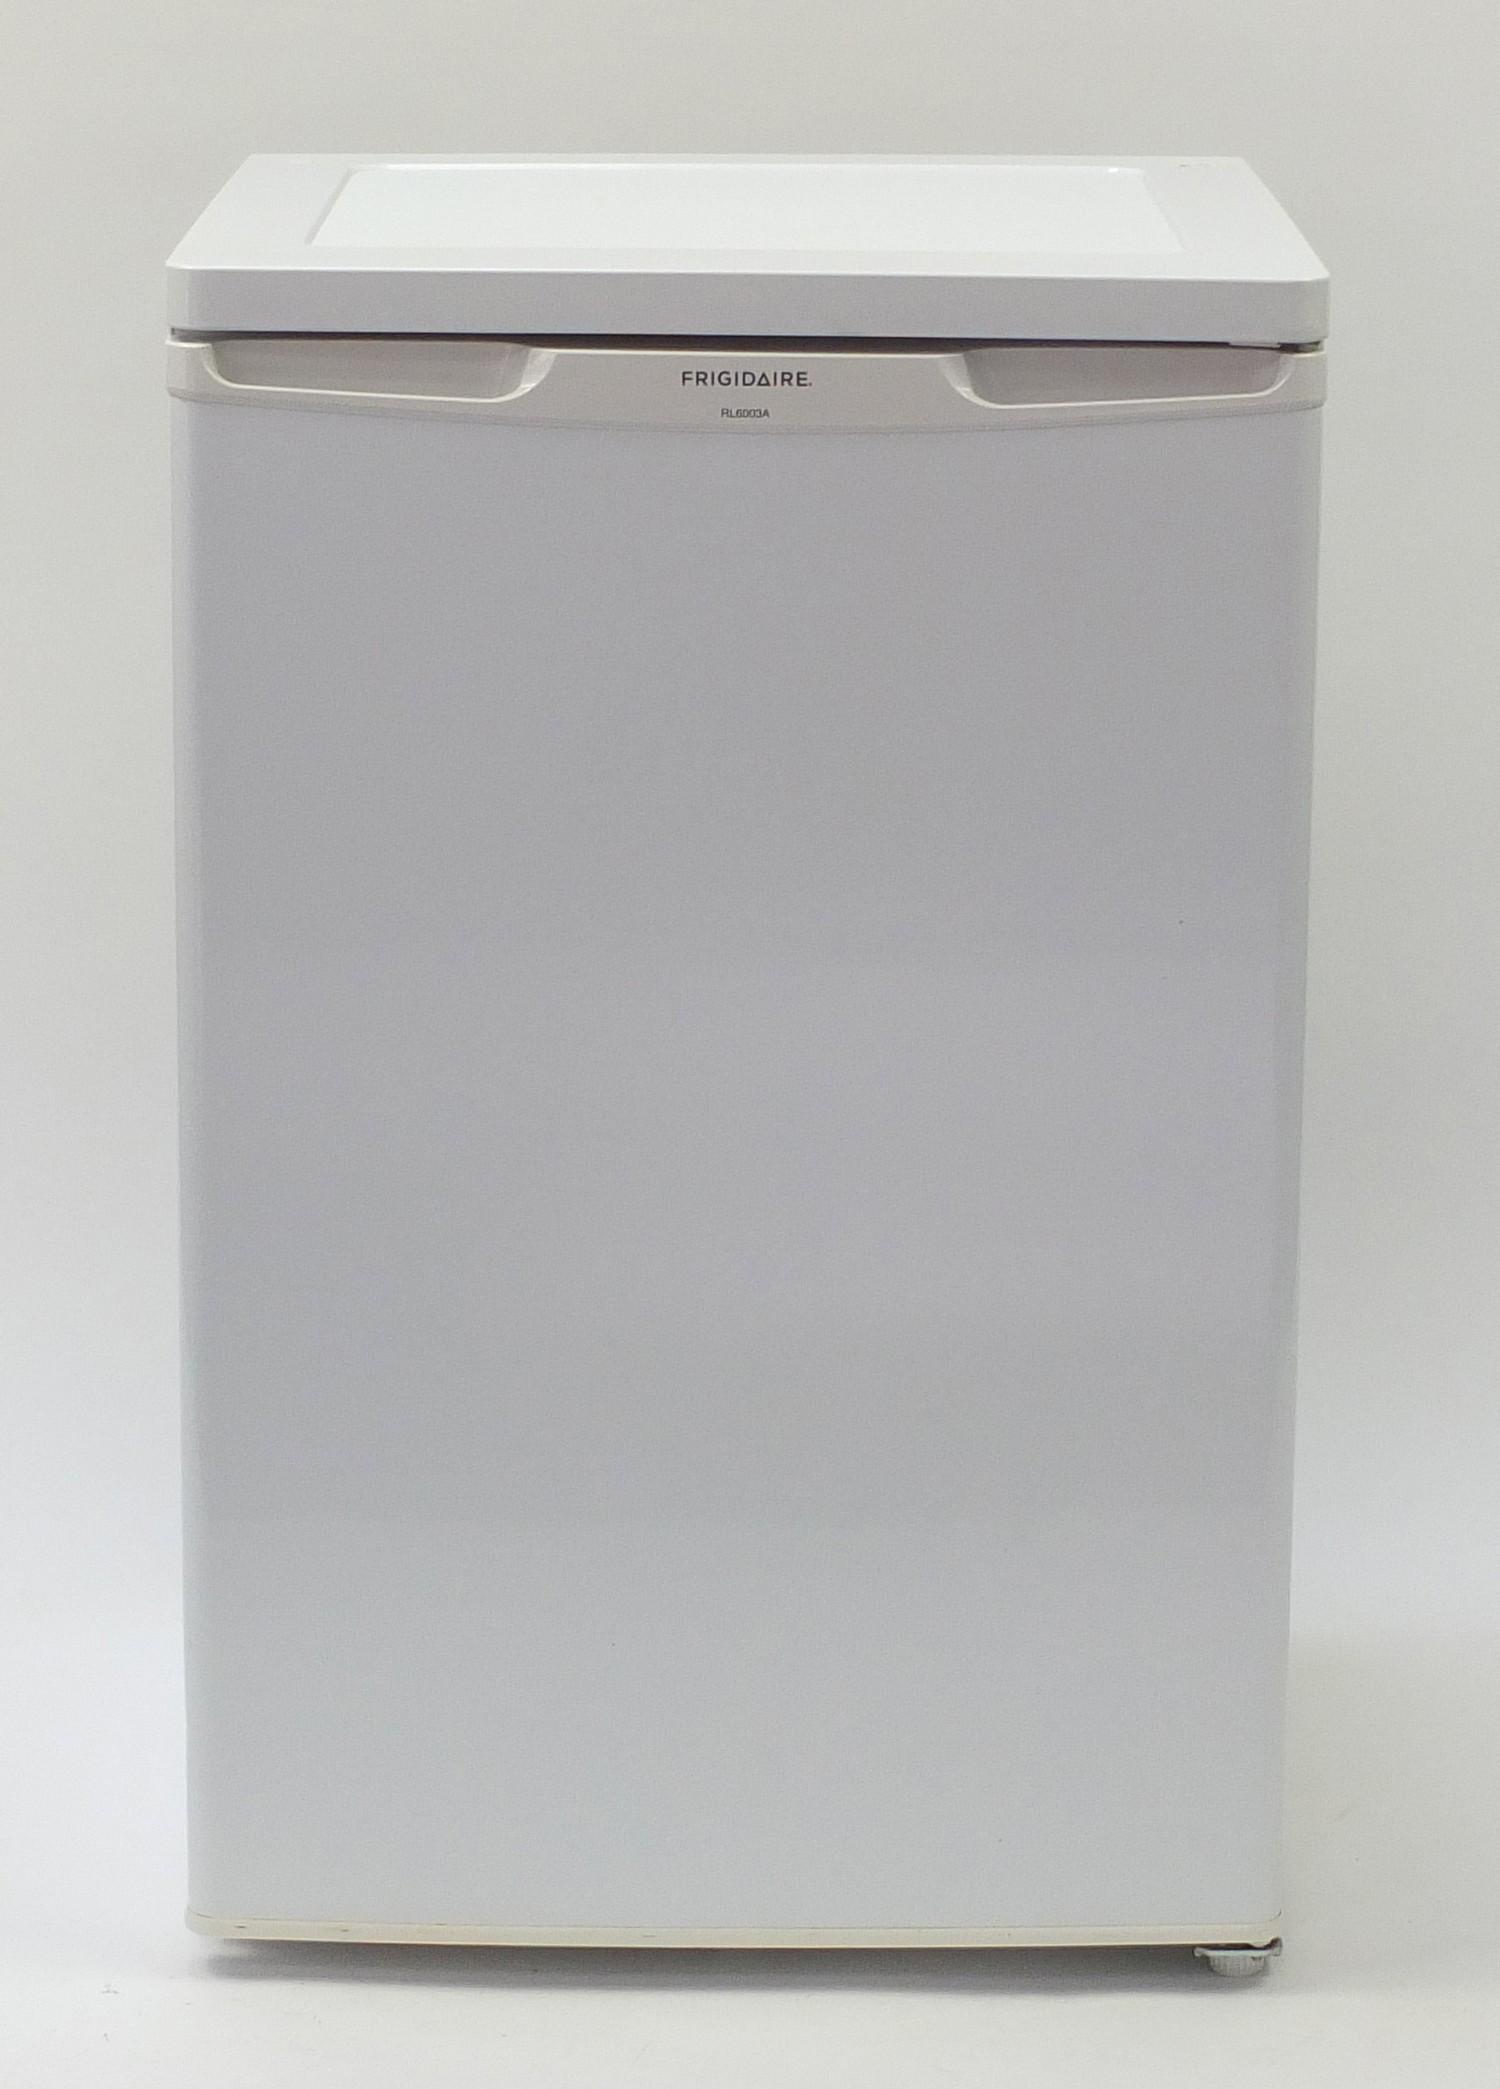 Frigidaire undercounter fridge, model RL6003A, 85cm H x 55cm W x 55cm D : For Further Condition